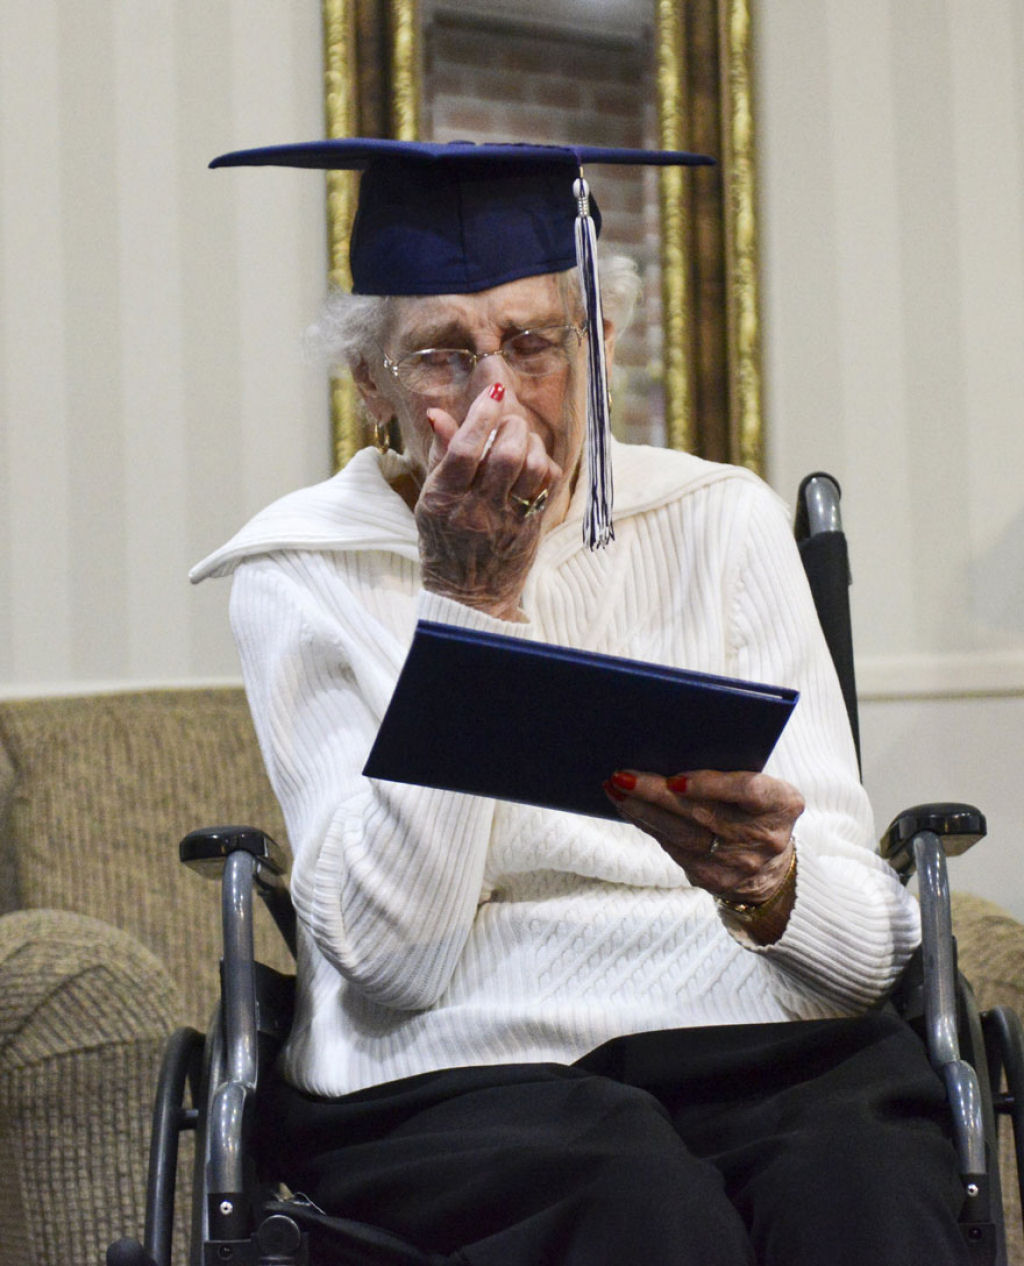 Esta idosa de 97 anos chora de alegria depois de conseguir ao fim seu diploma 03